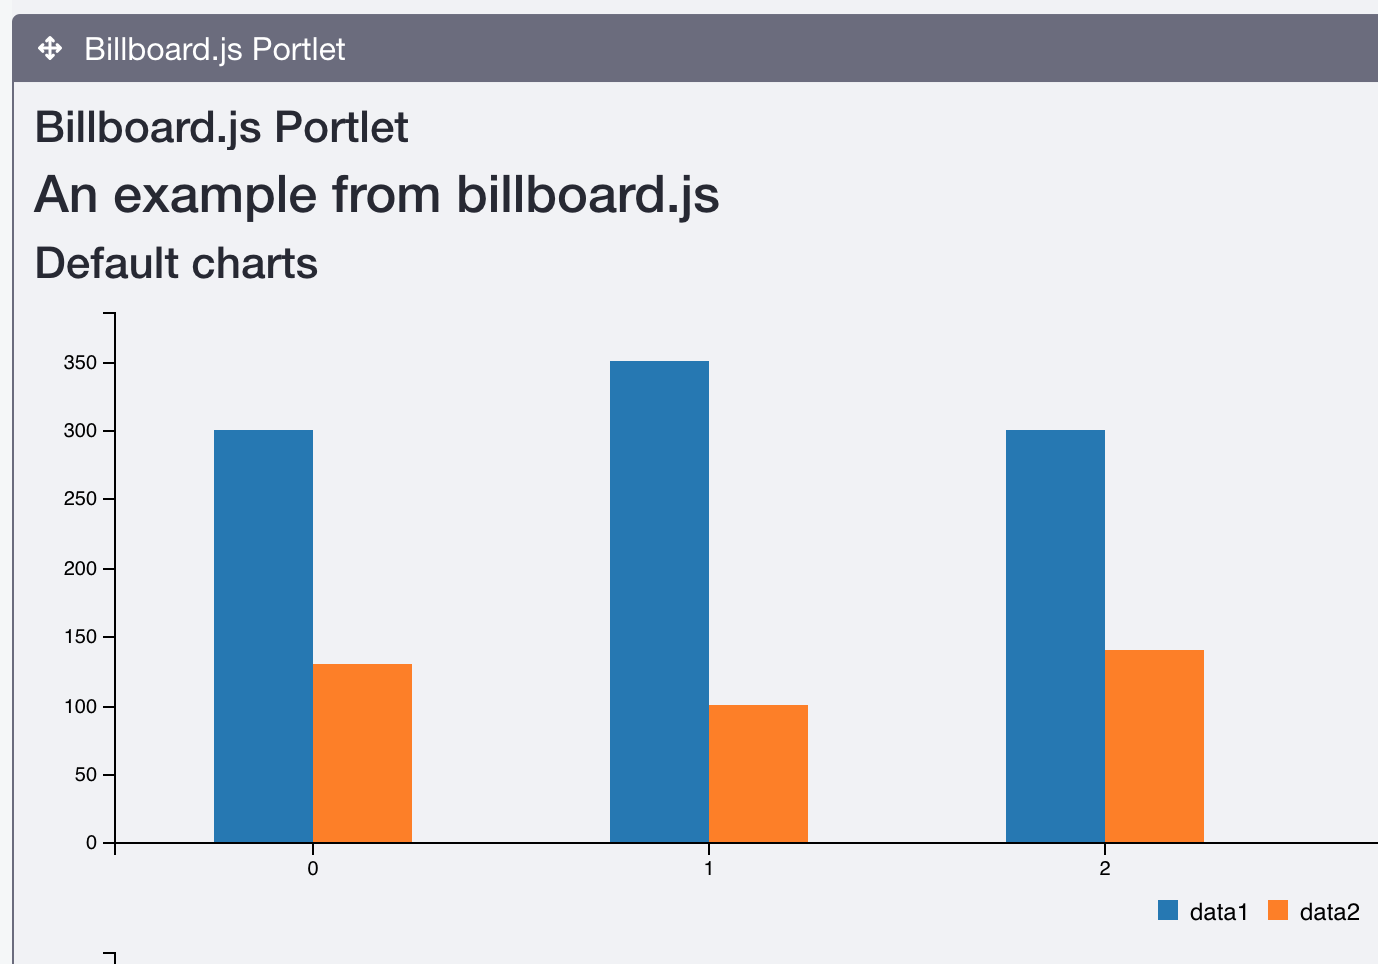 Figure 1: The Billboard.js npm Portlet shows off some nice looking graphs using Billboard.js.